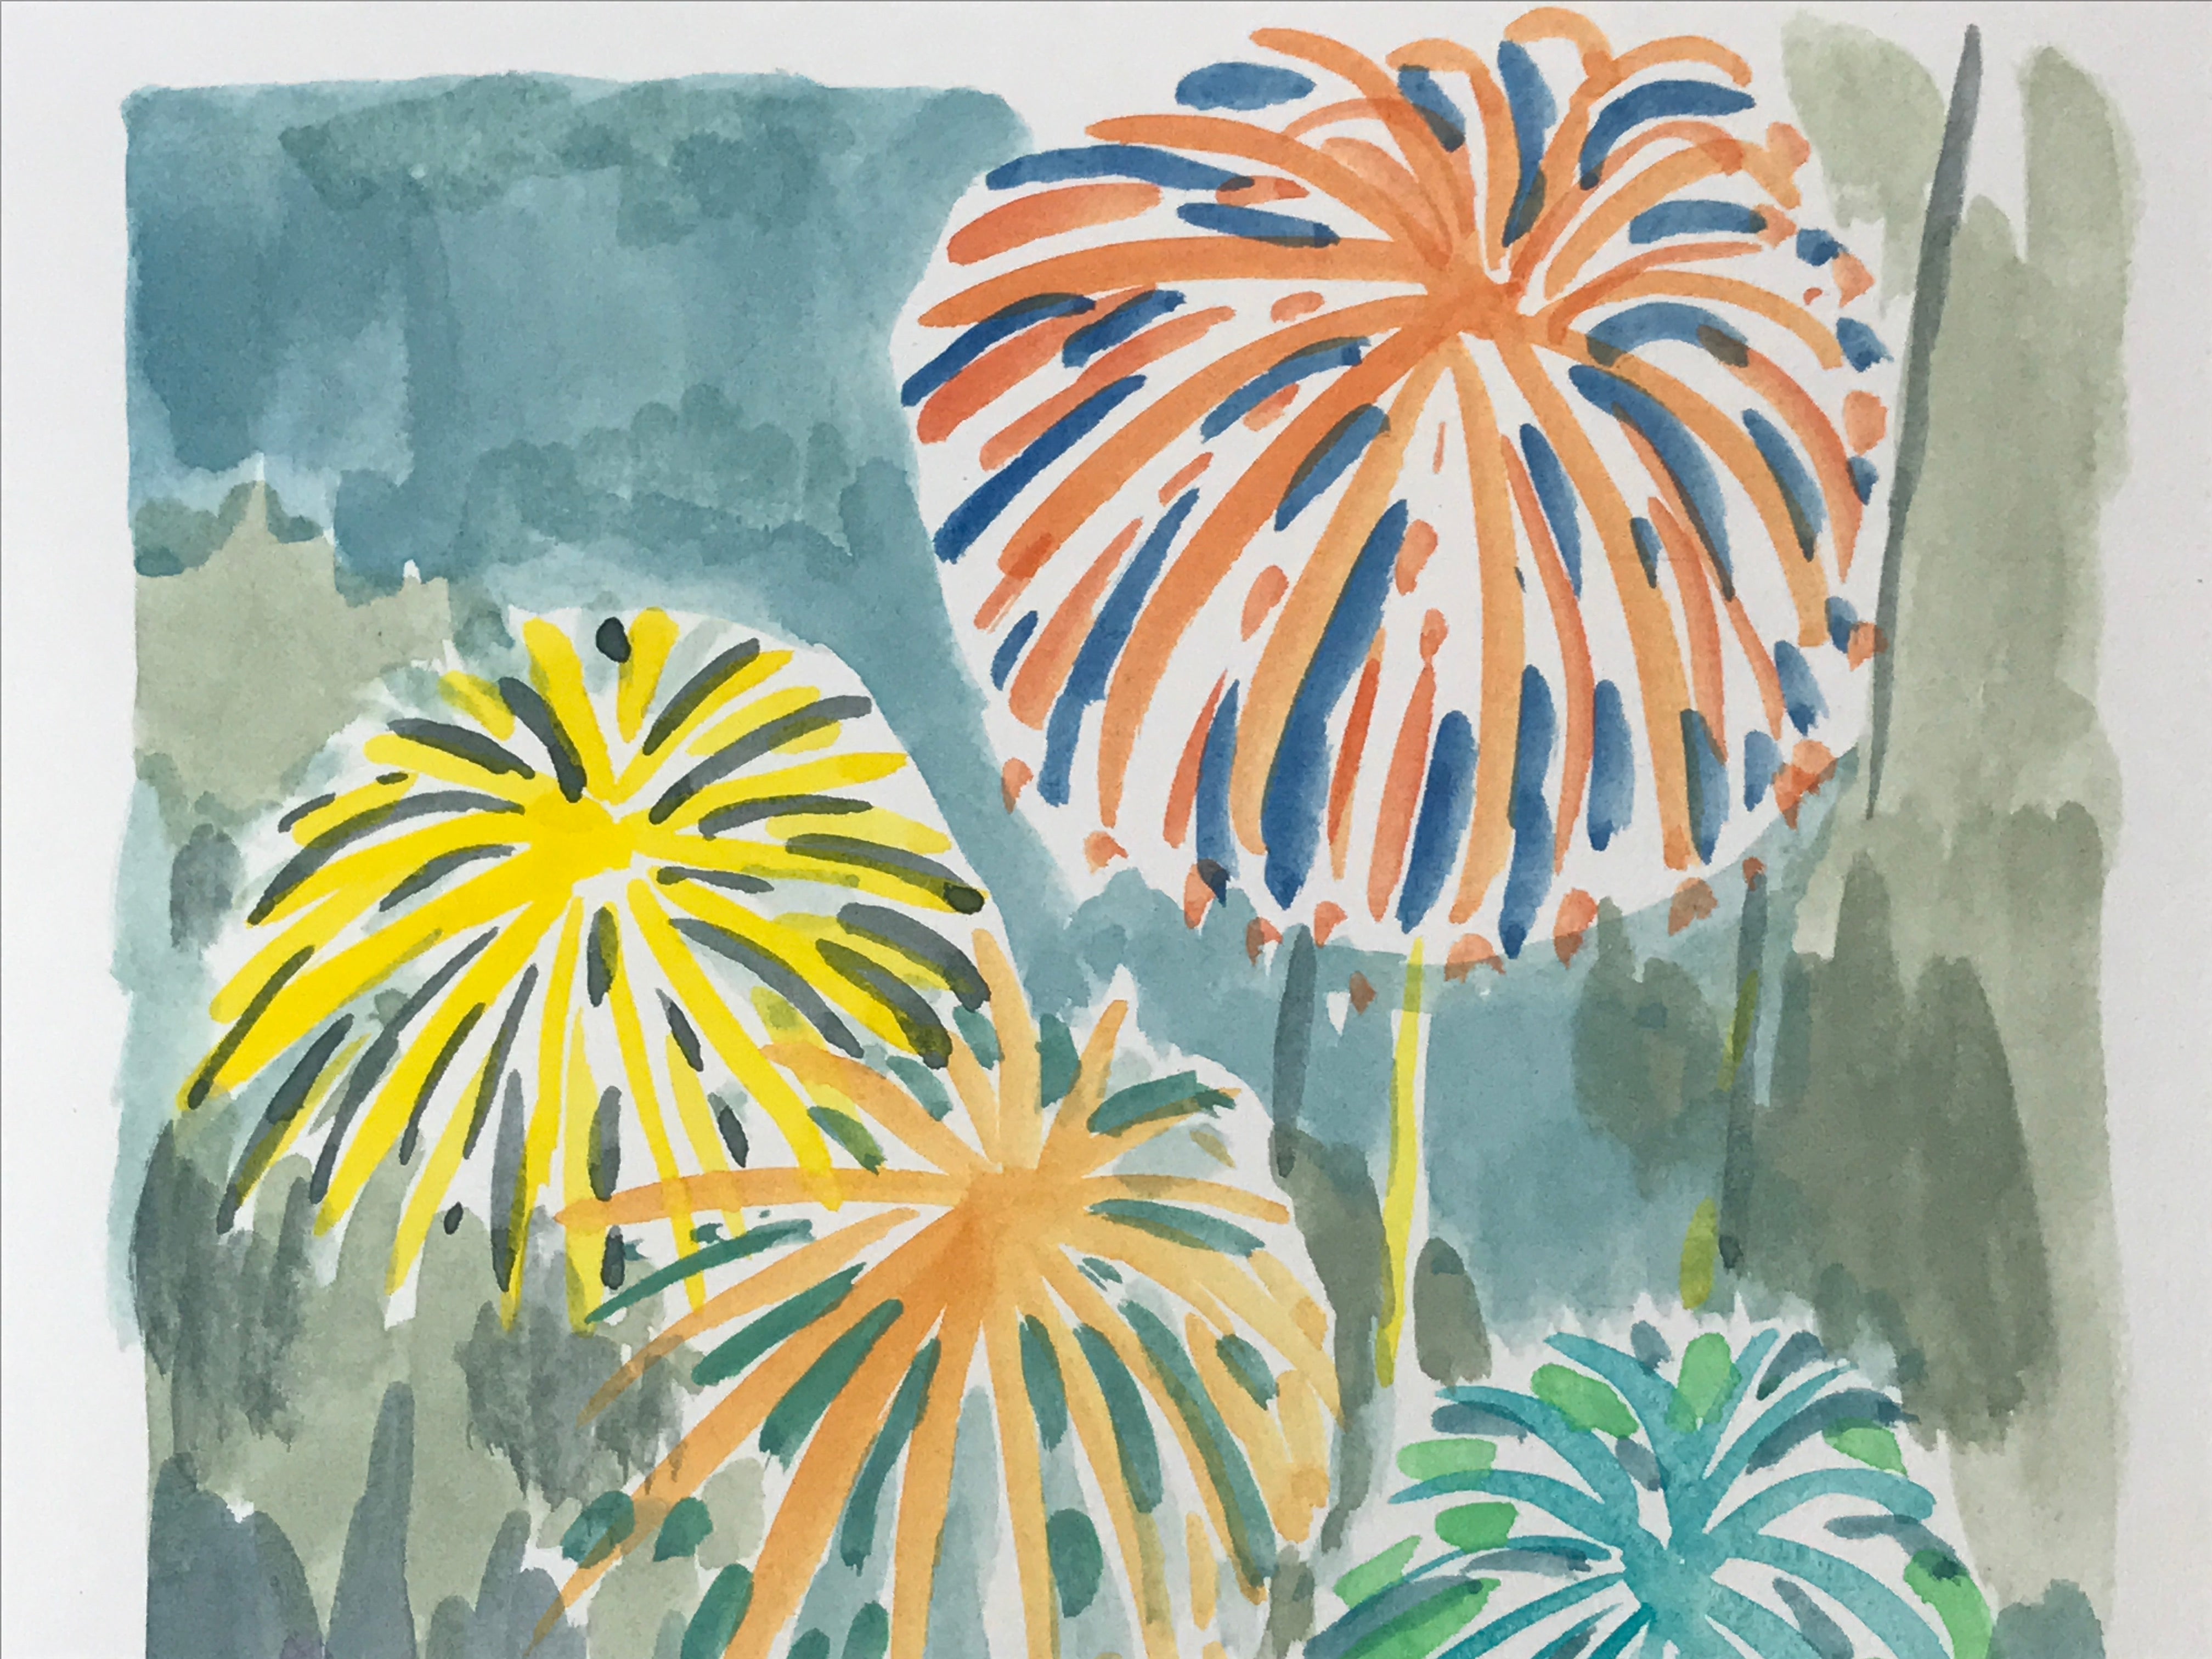 Japanese Fireworks Watercolor Painting Original Art Cardstock Unsigned FL147